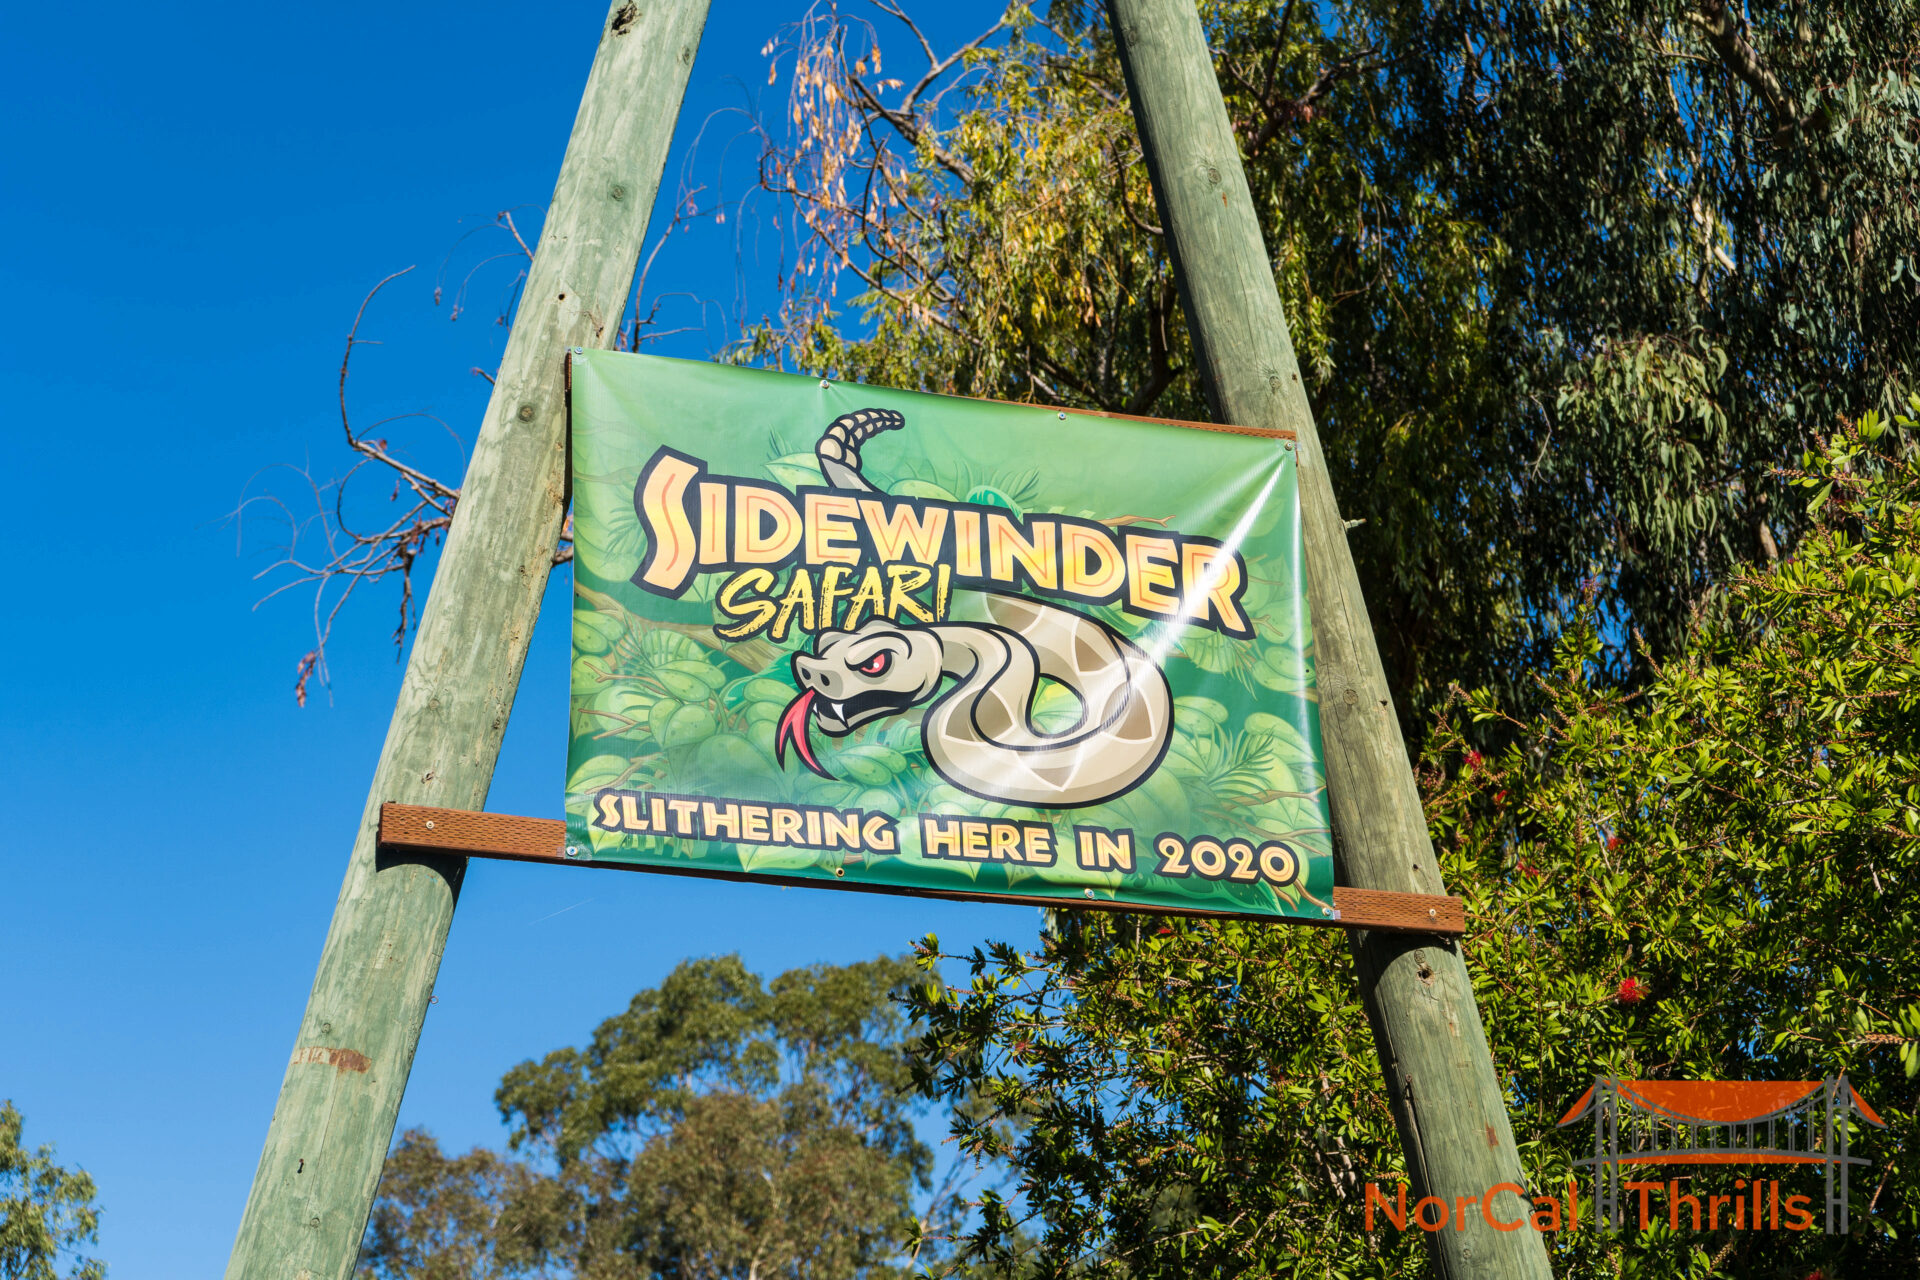 Sidewinder Safari